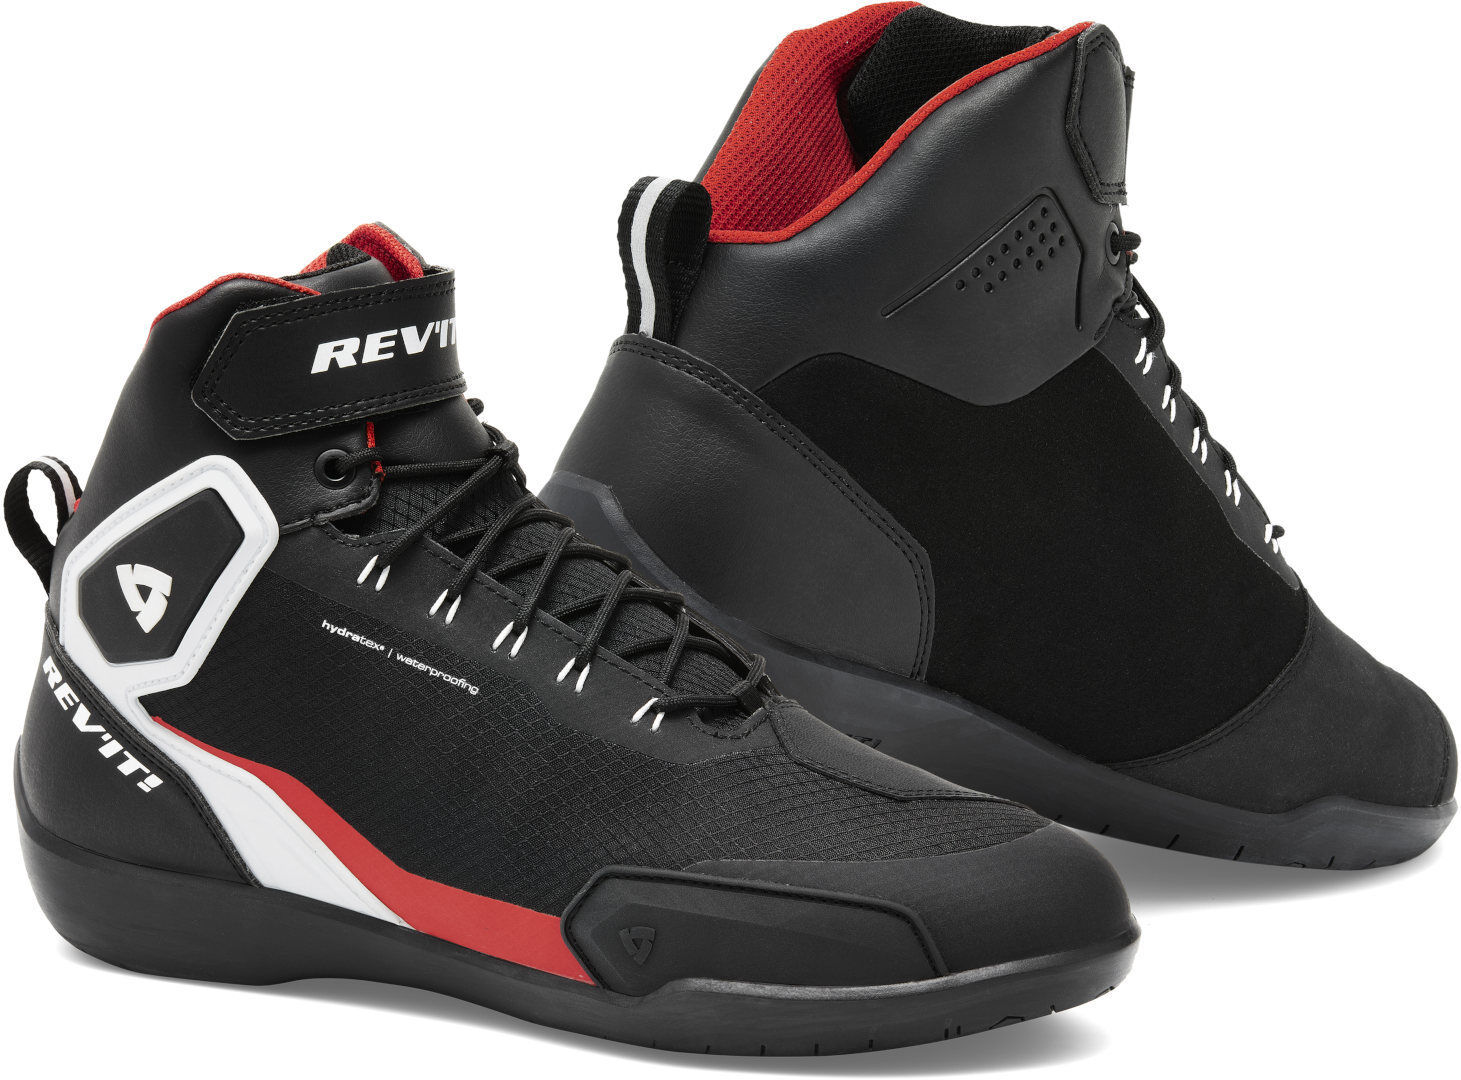 Revit G-Force H2O Zapatos impermeables para motocicletas - Negro Blanco Rojo (47)